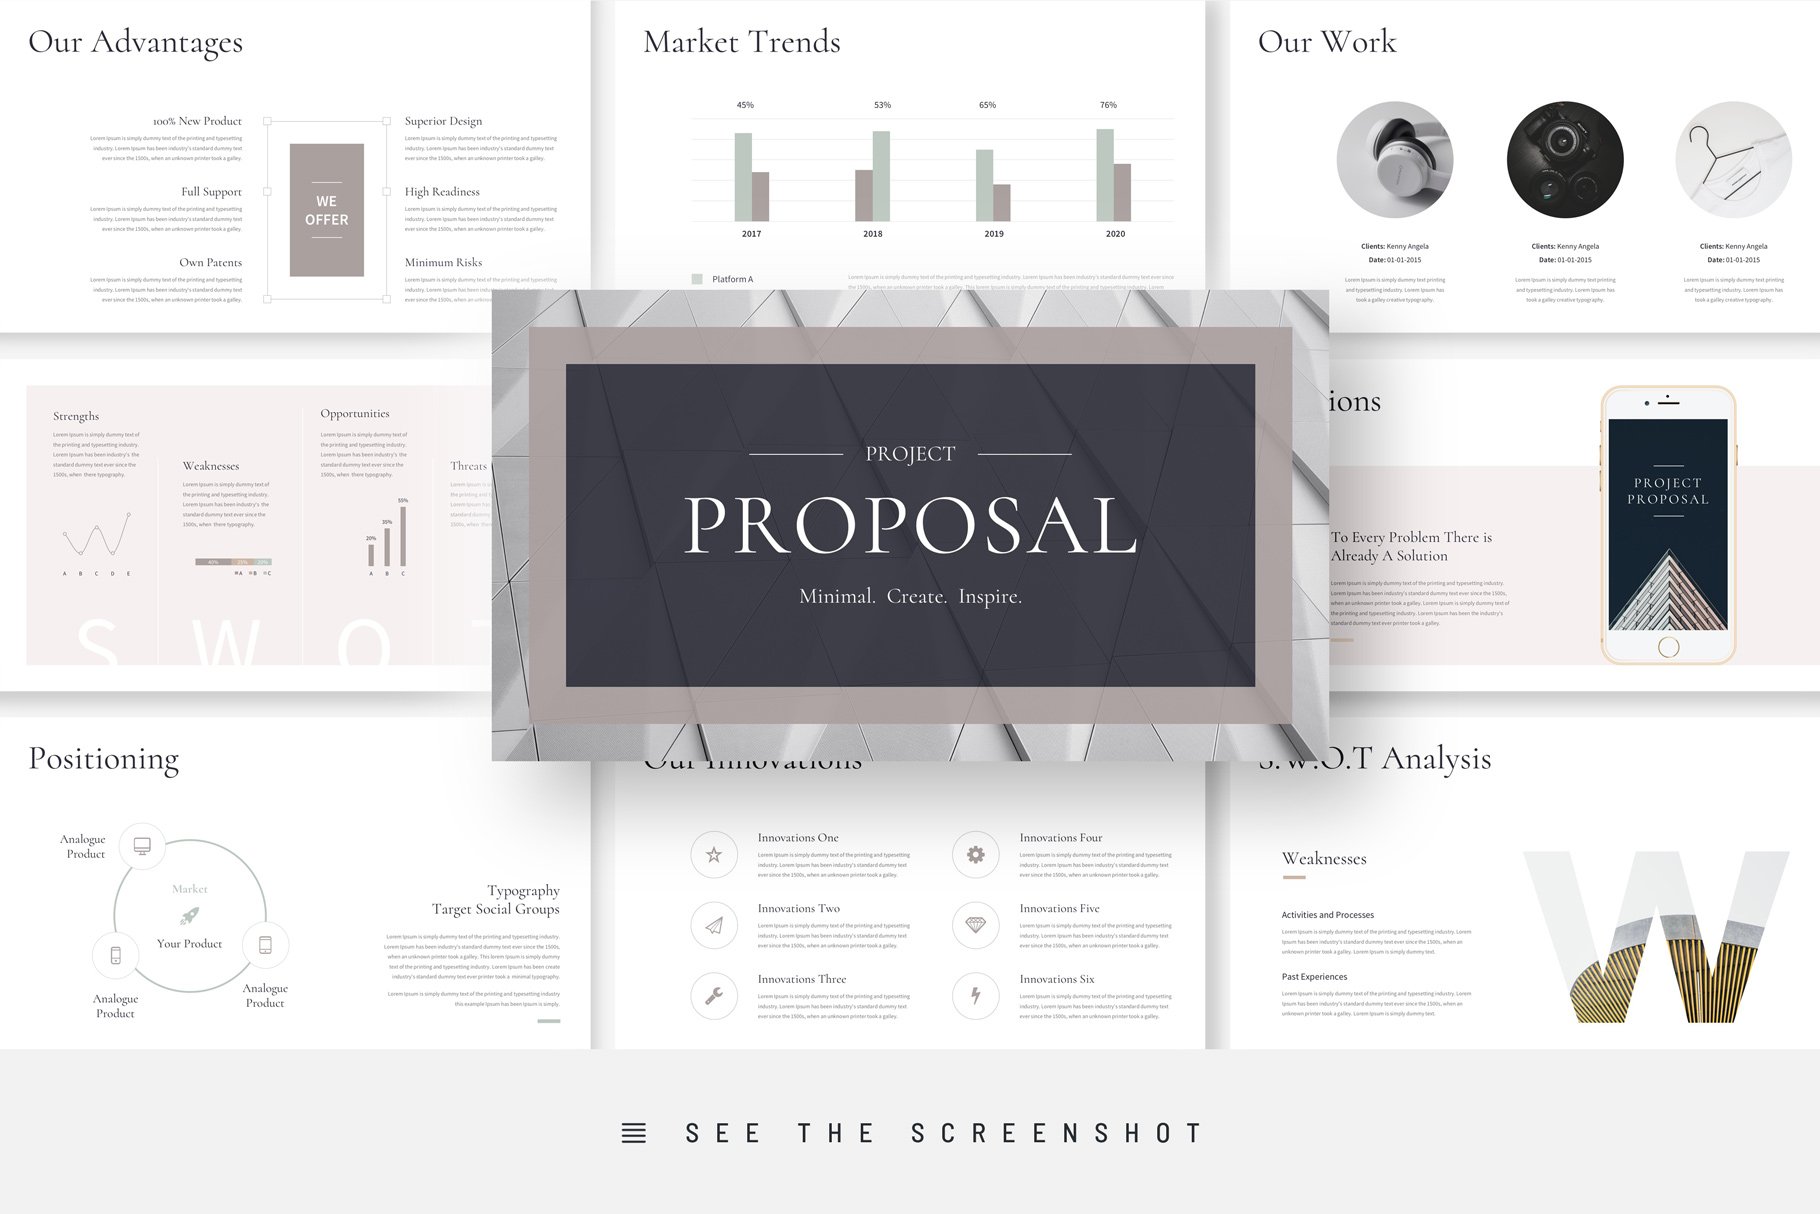 Project Proposal Google Slides cover image.